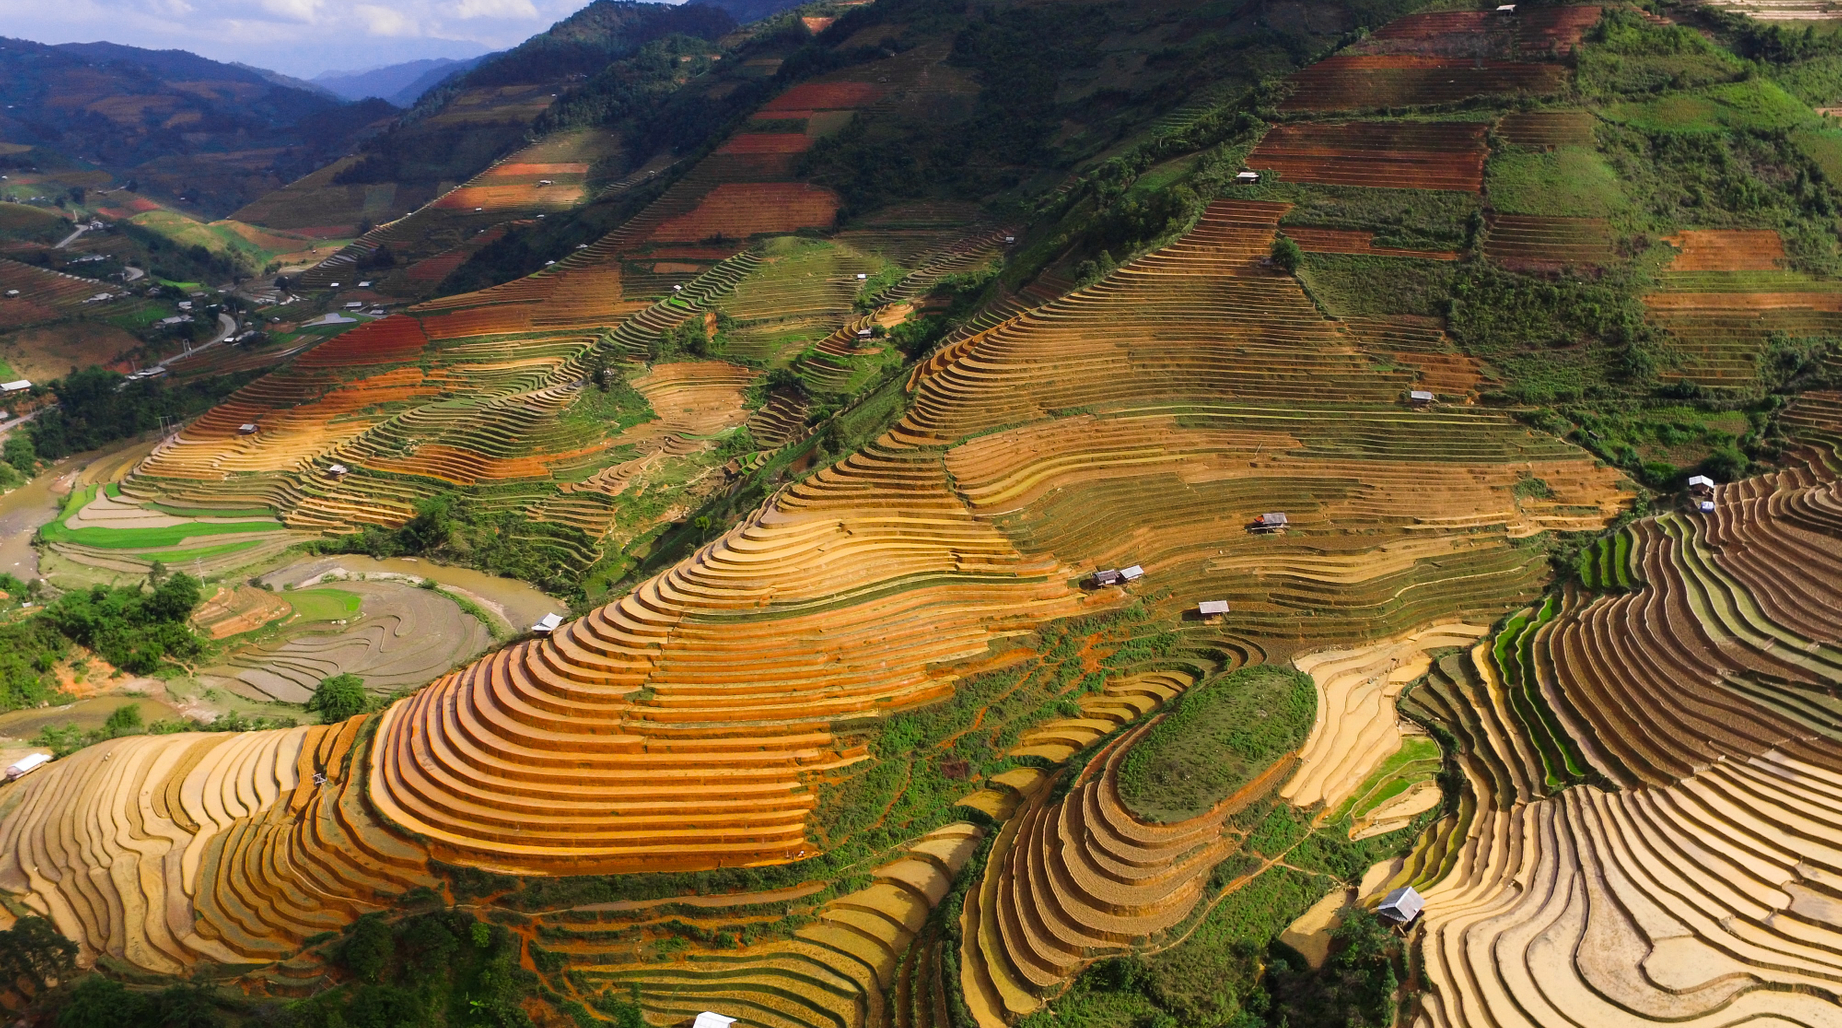  paddy field in Vietnam 